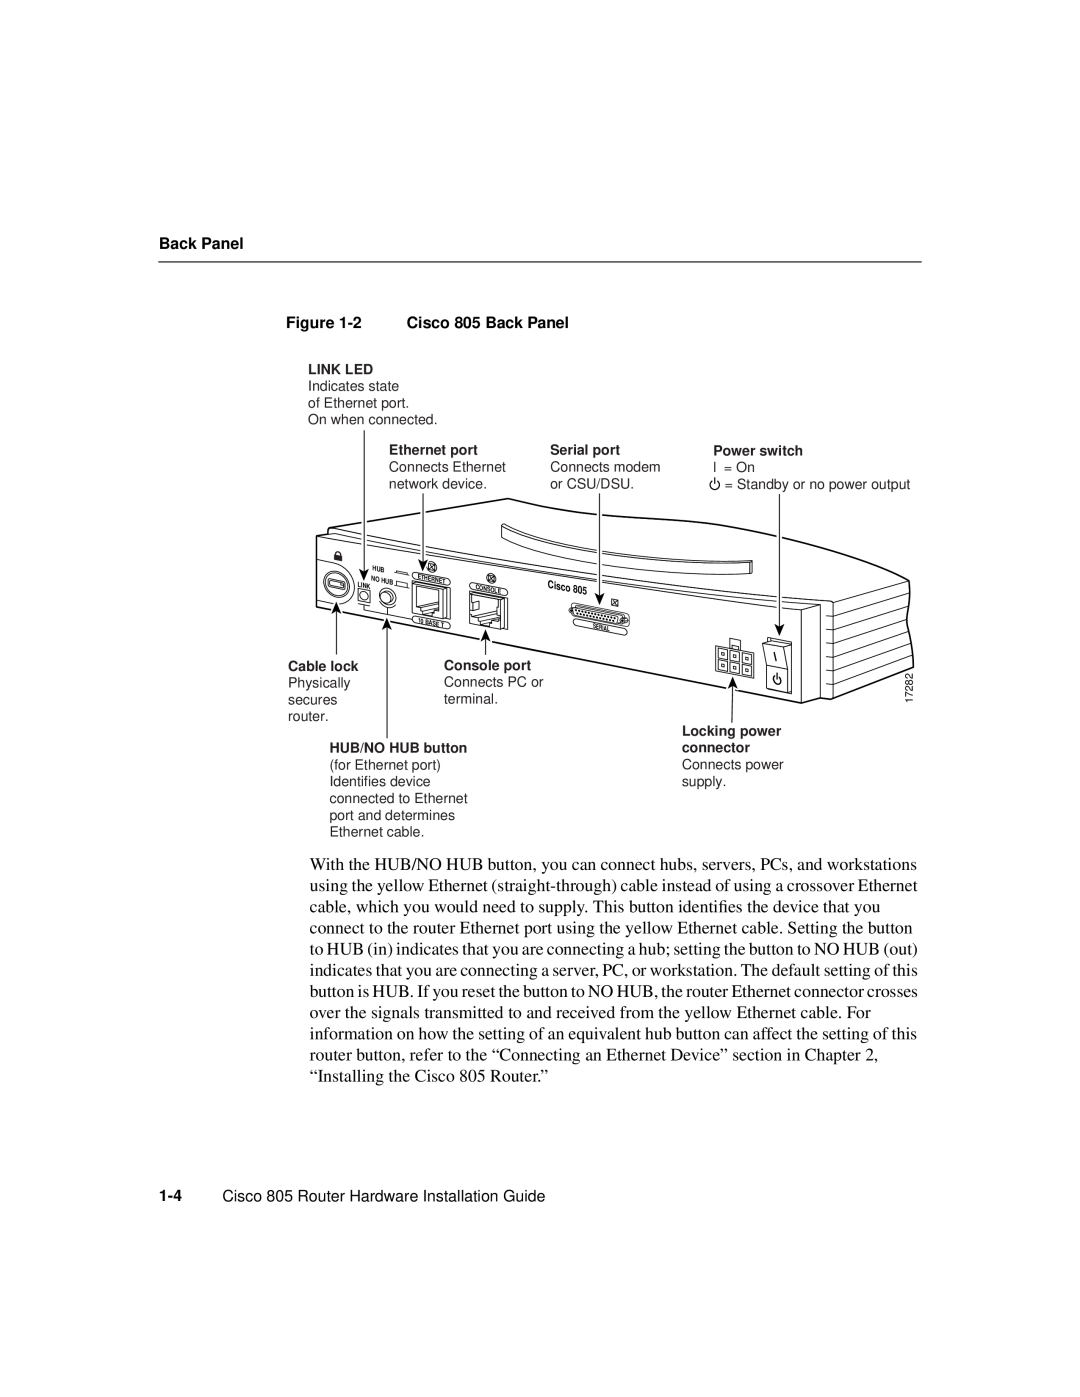 Cisco Systems CISCO805 manual 2 Cisco 805 Back Panel, Cisco 805 Router Hardware Installation Guide 